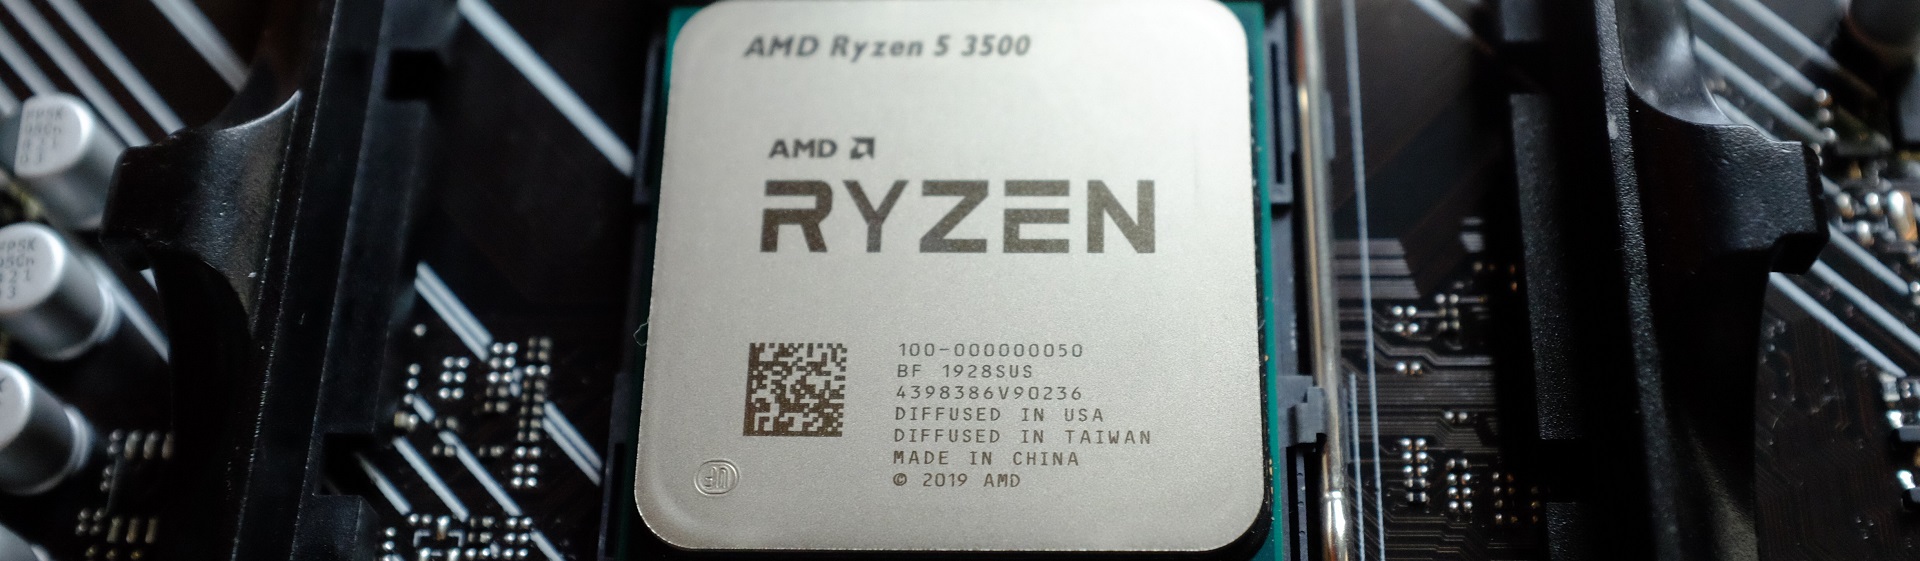 AMD Ryzen 5 3500 – Đánh Giá Gaming Gear